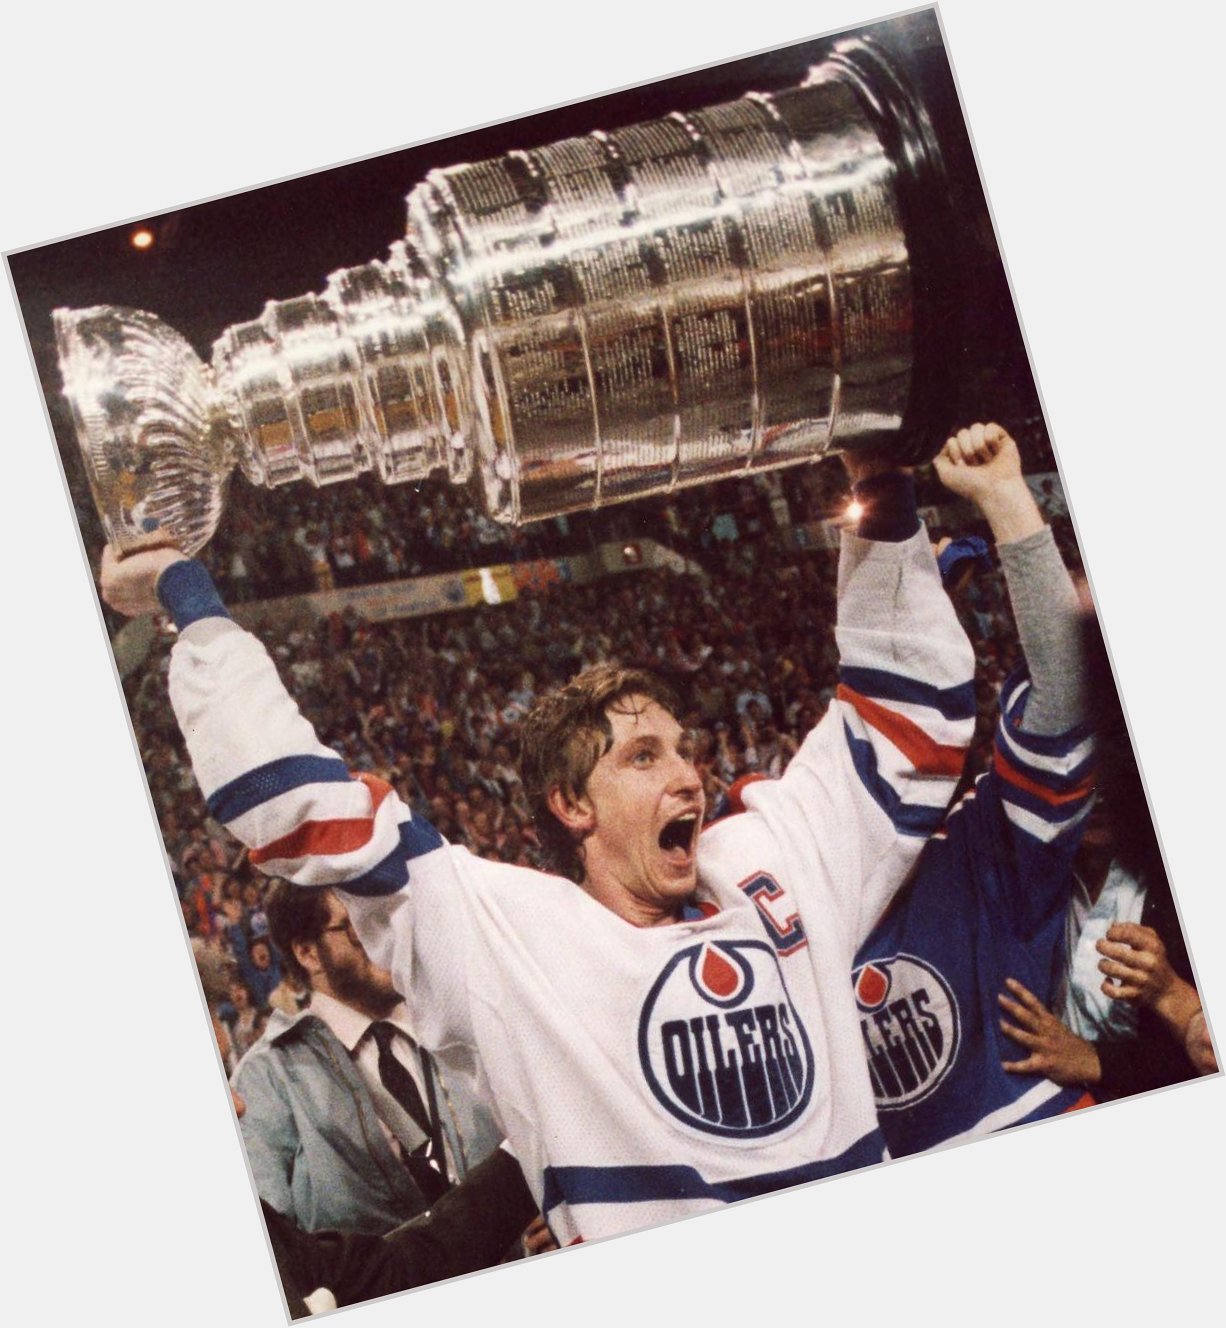 Happy 57th Birthday to The Great One, Wayne Gretzky! 